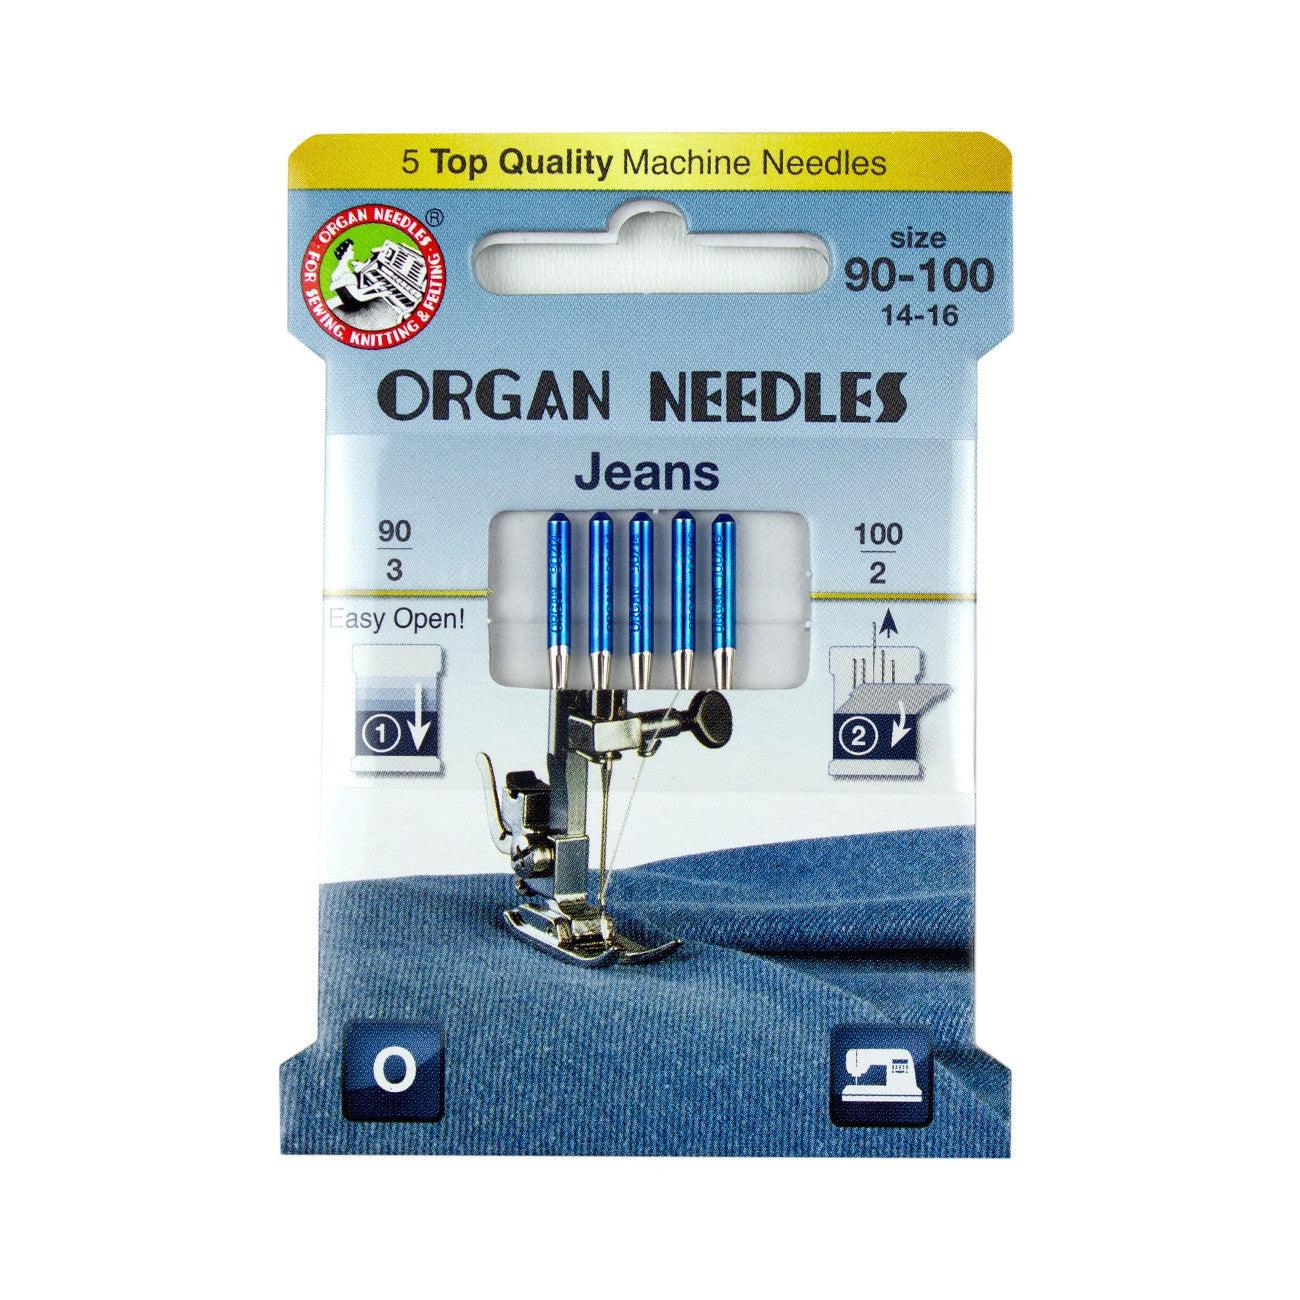 Organ Needles Jeans Assortment 90-100 Eco Pack